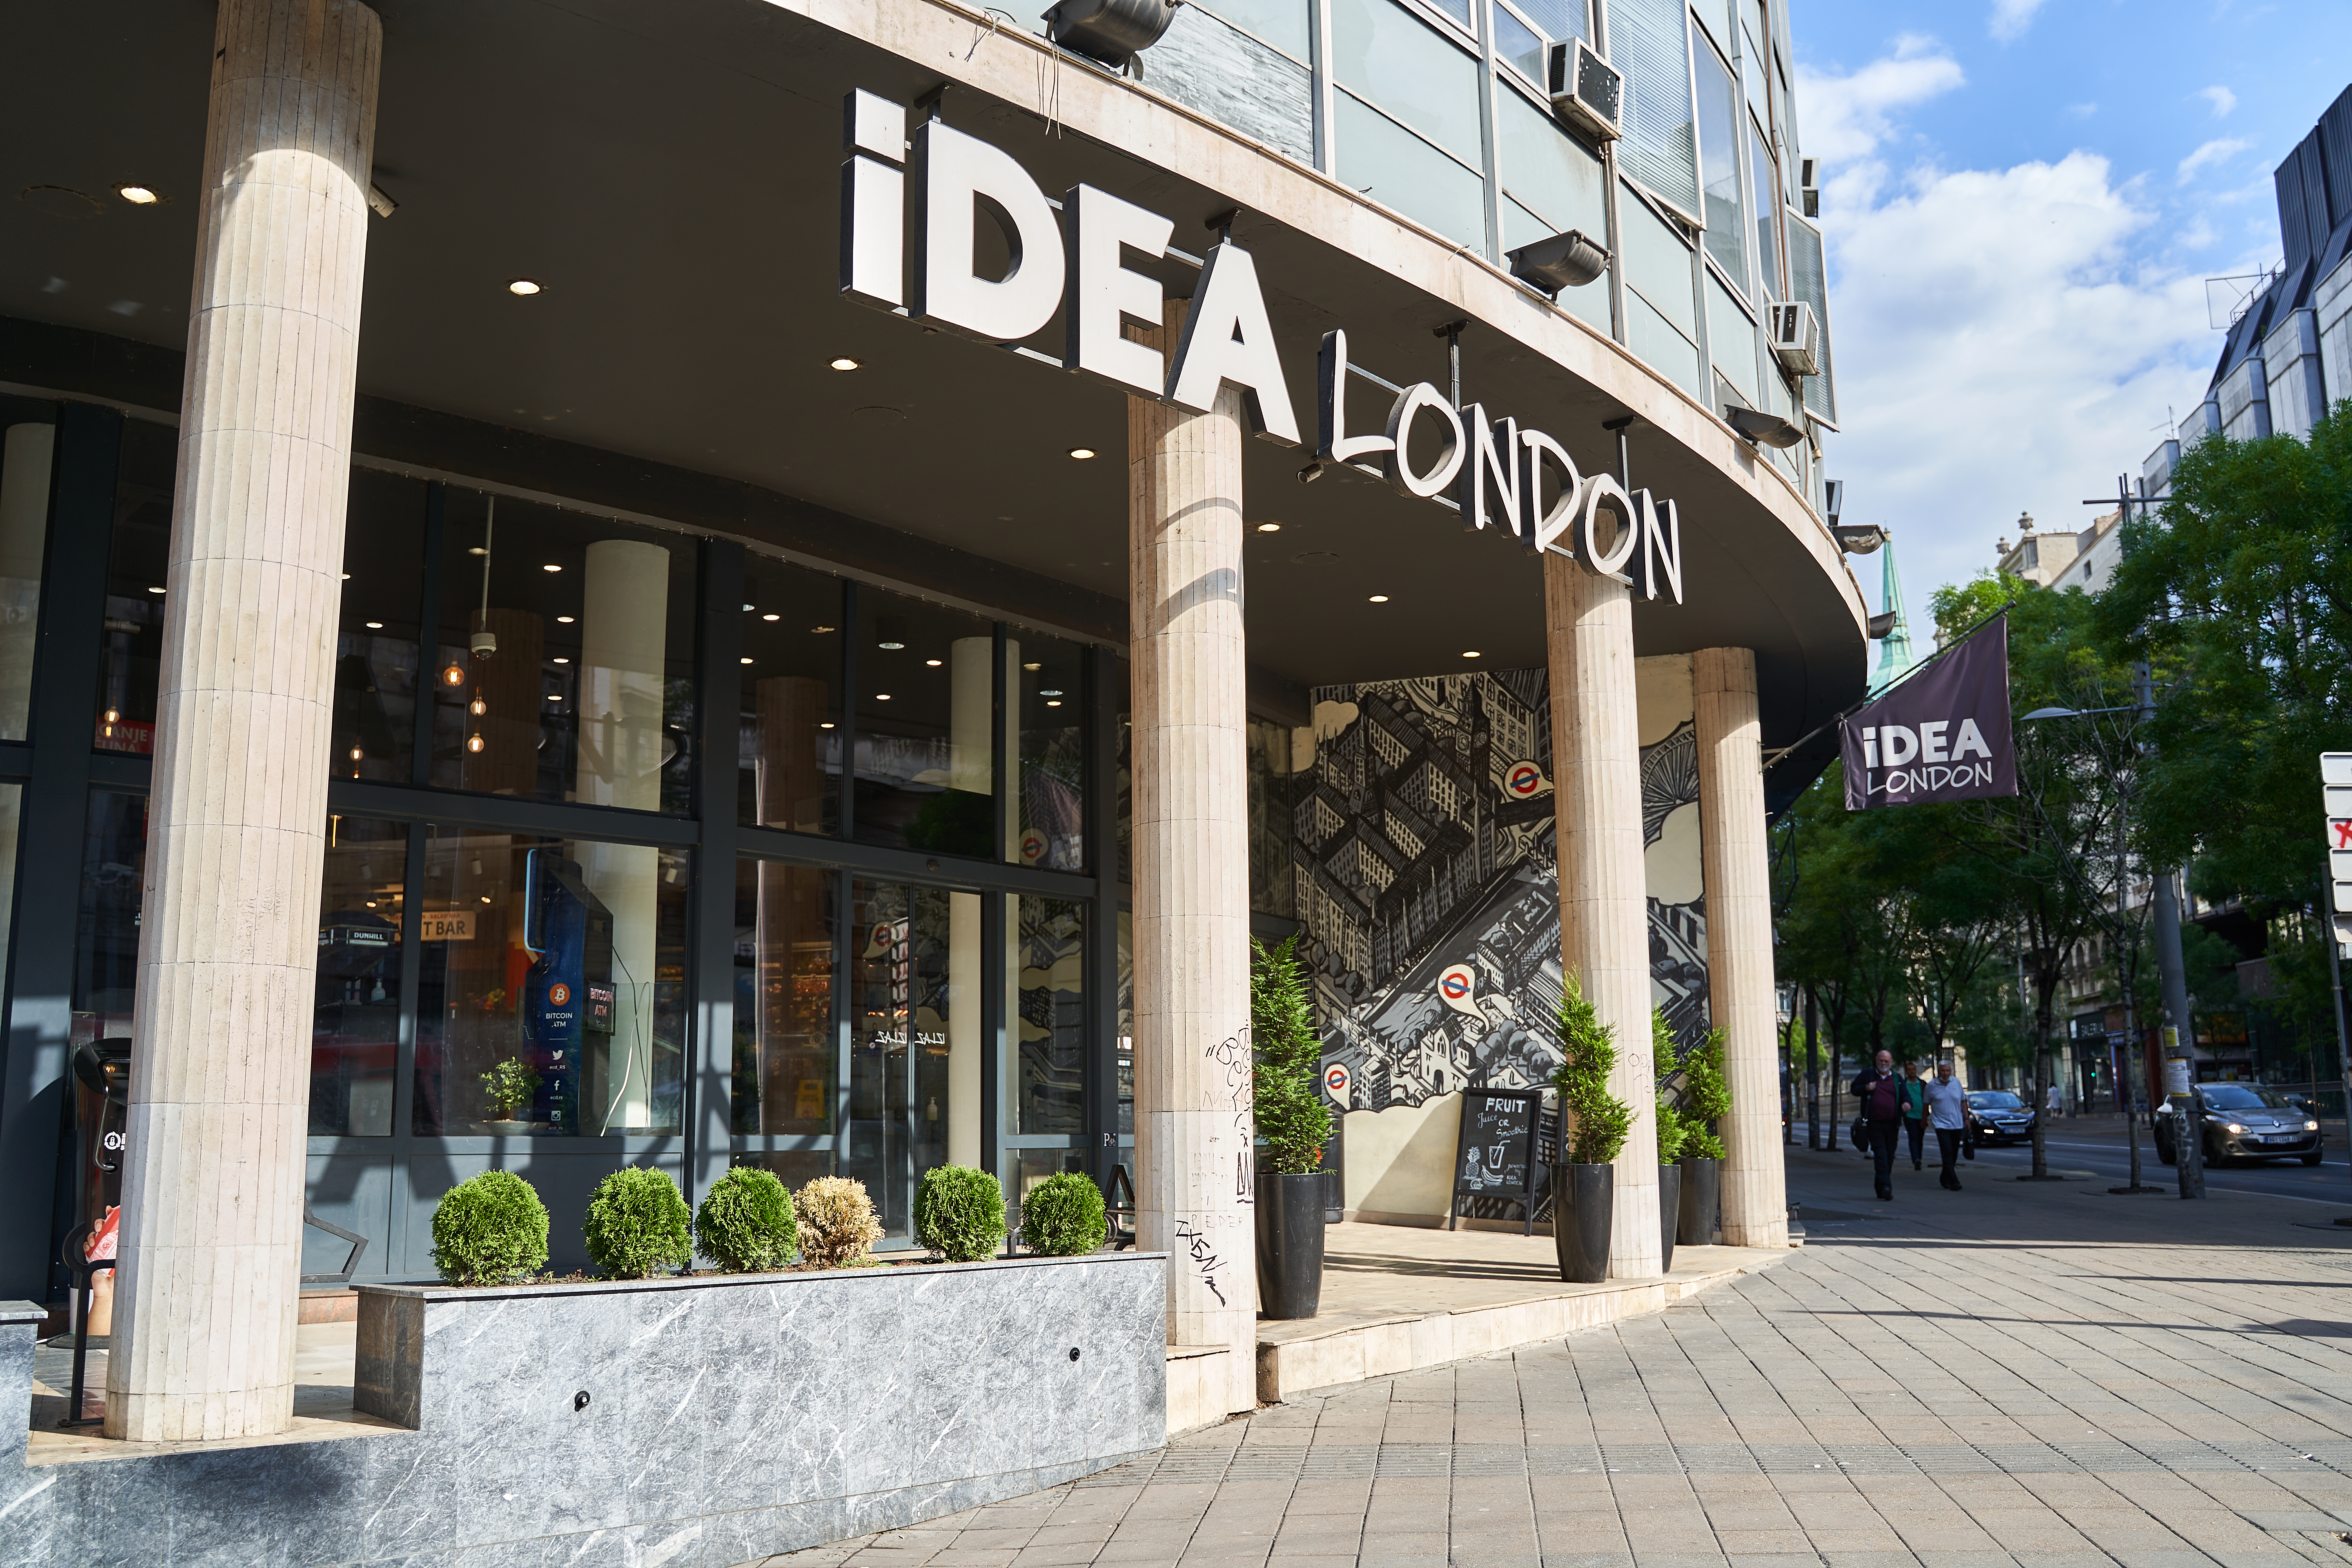 Brend - Idea London